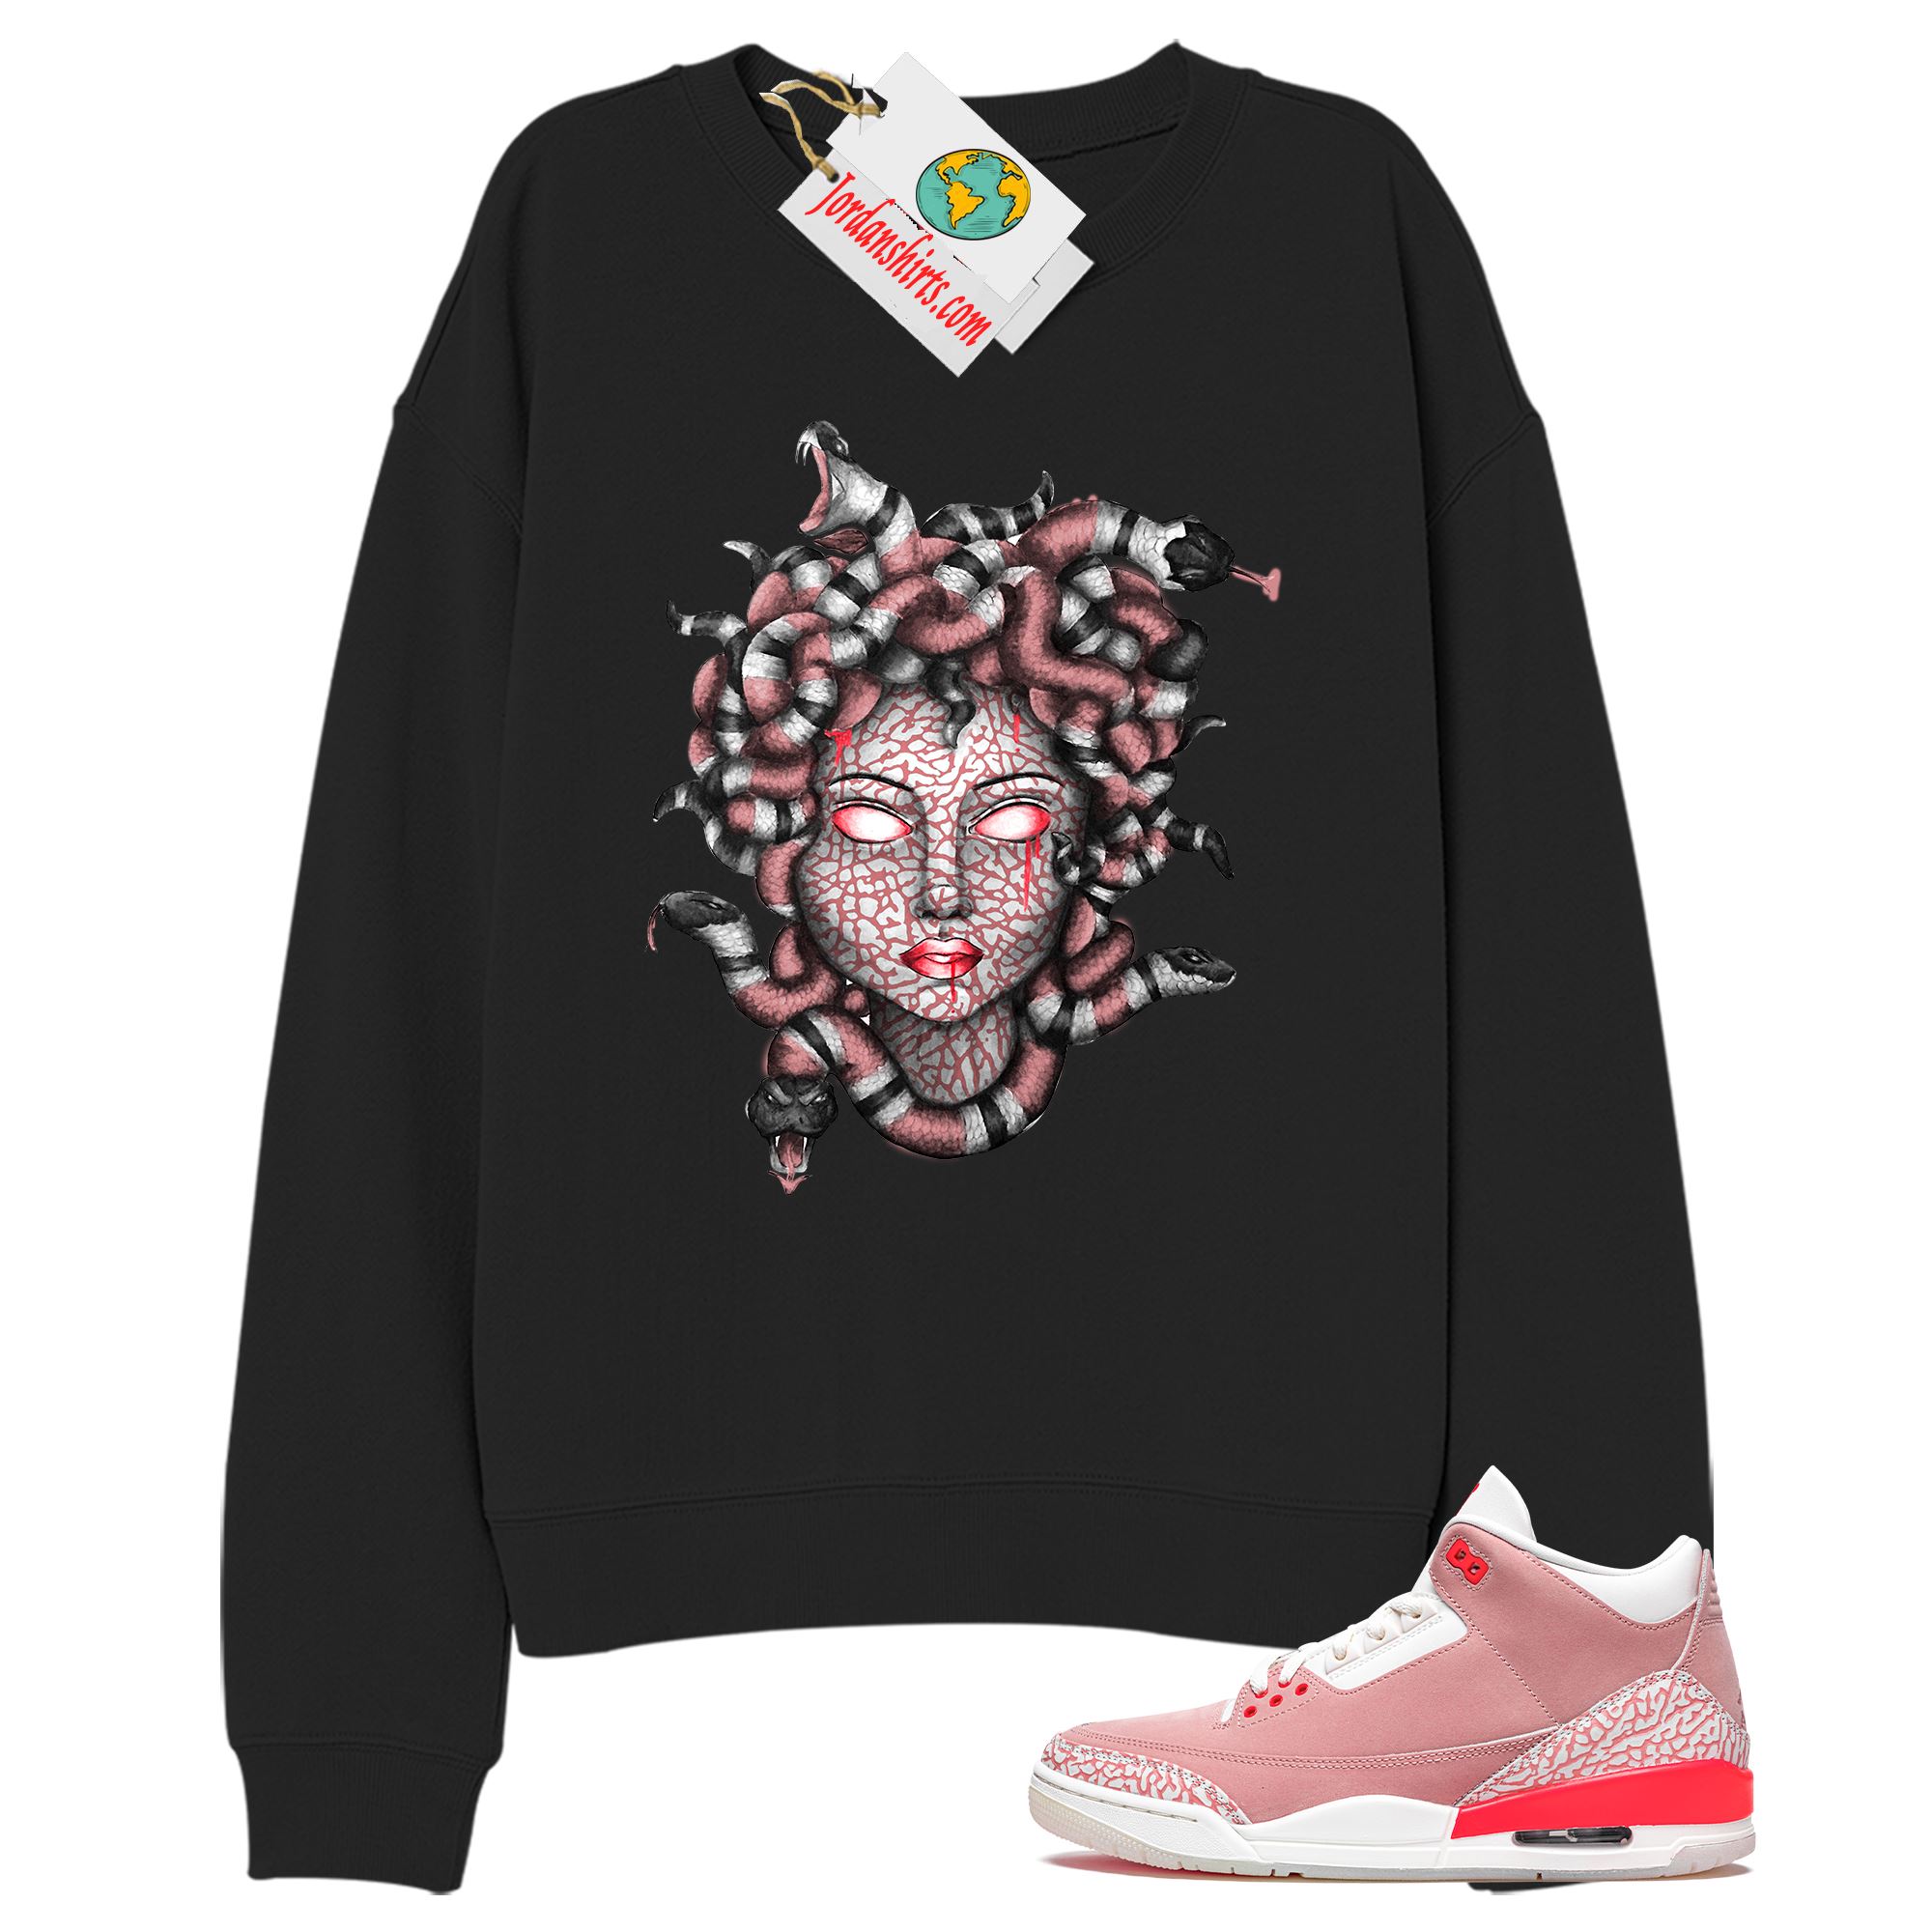 Jordan 3 Sweatshirt, Medusa Snake Hair Black Sweatshirt Air Jordan 3 Rust Pink 3s Plus Size Up To 5xl